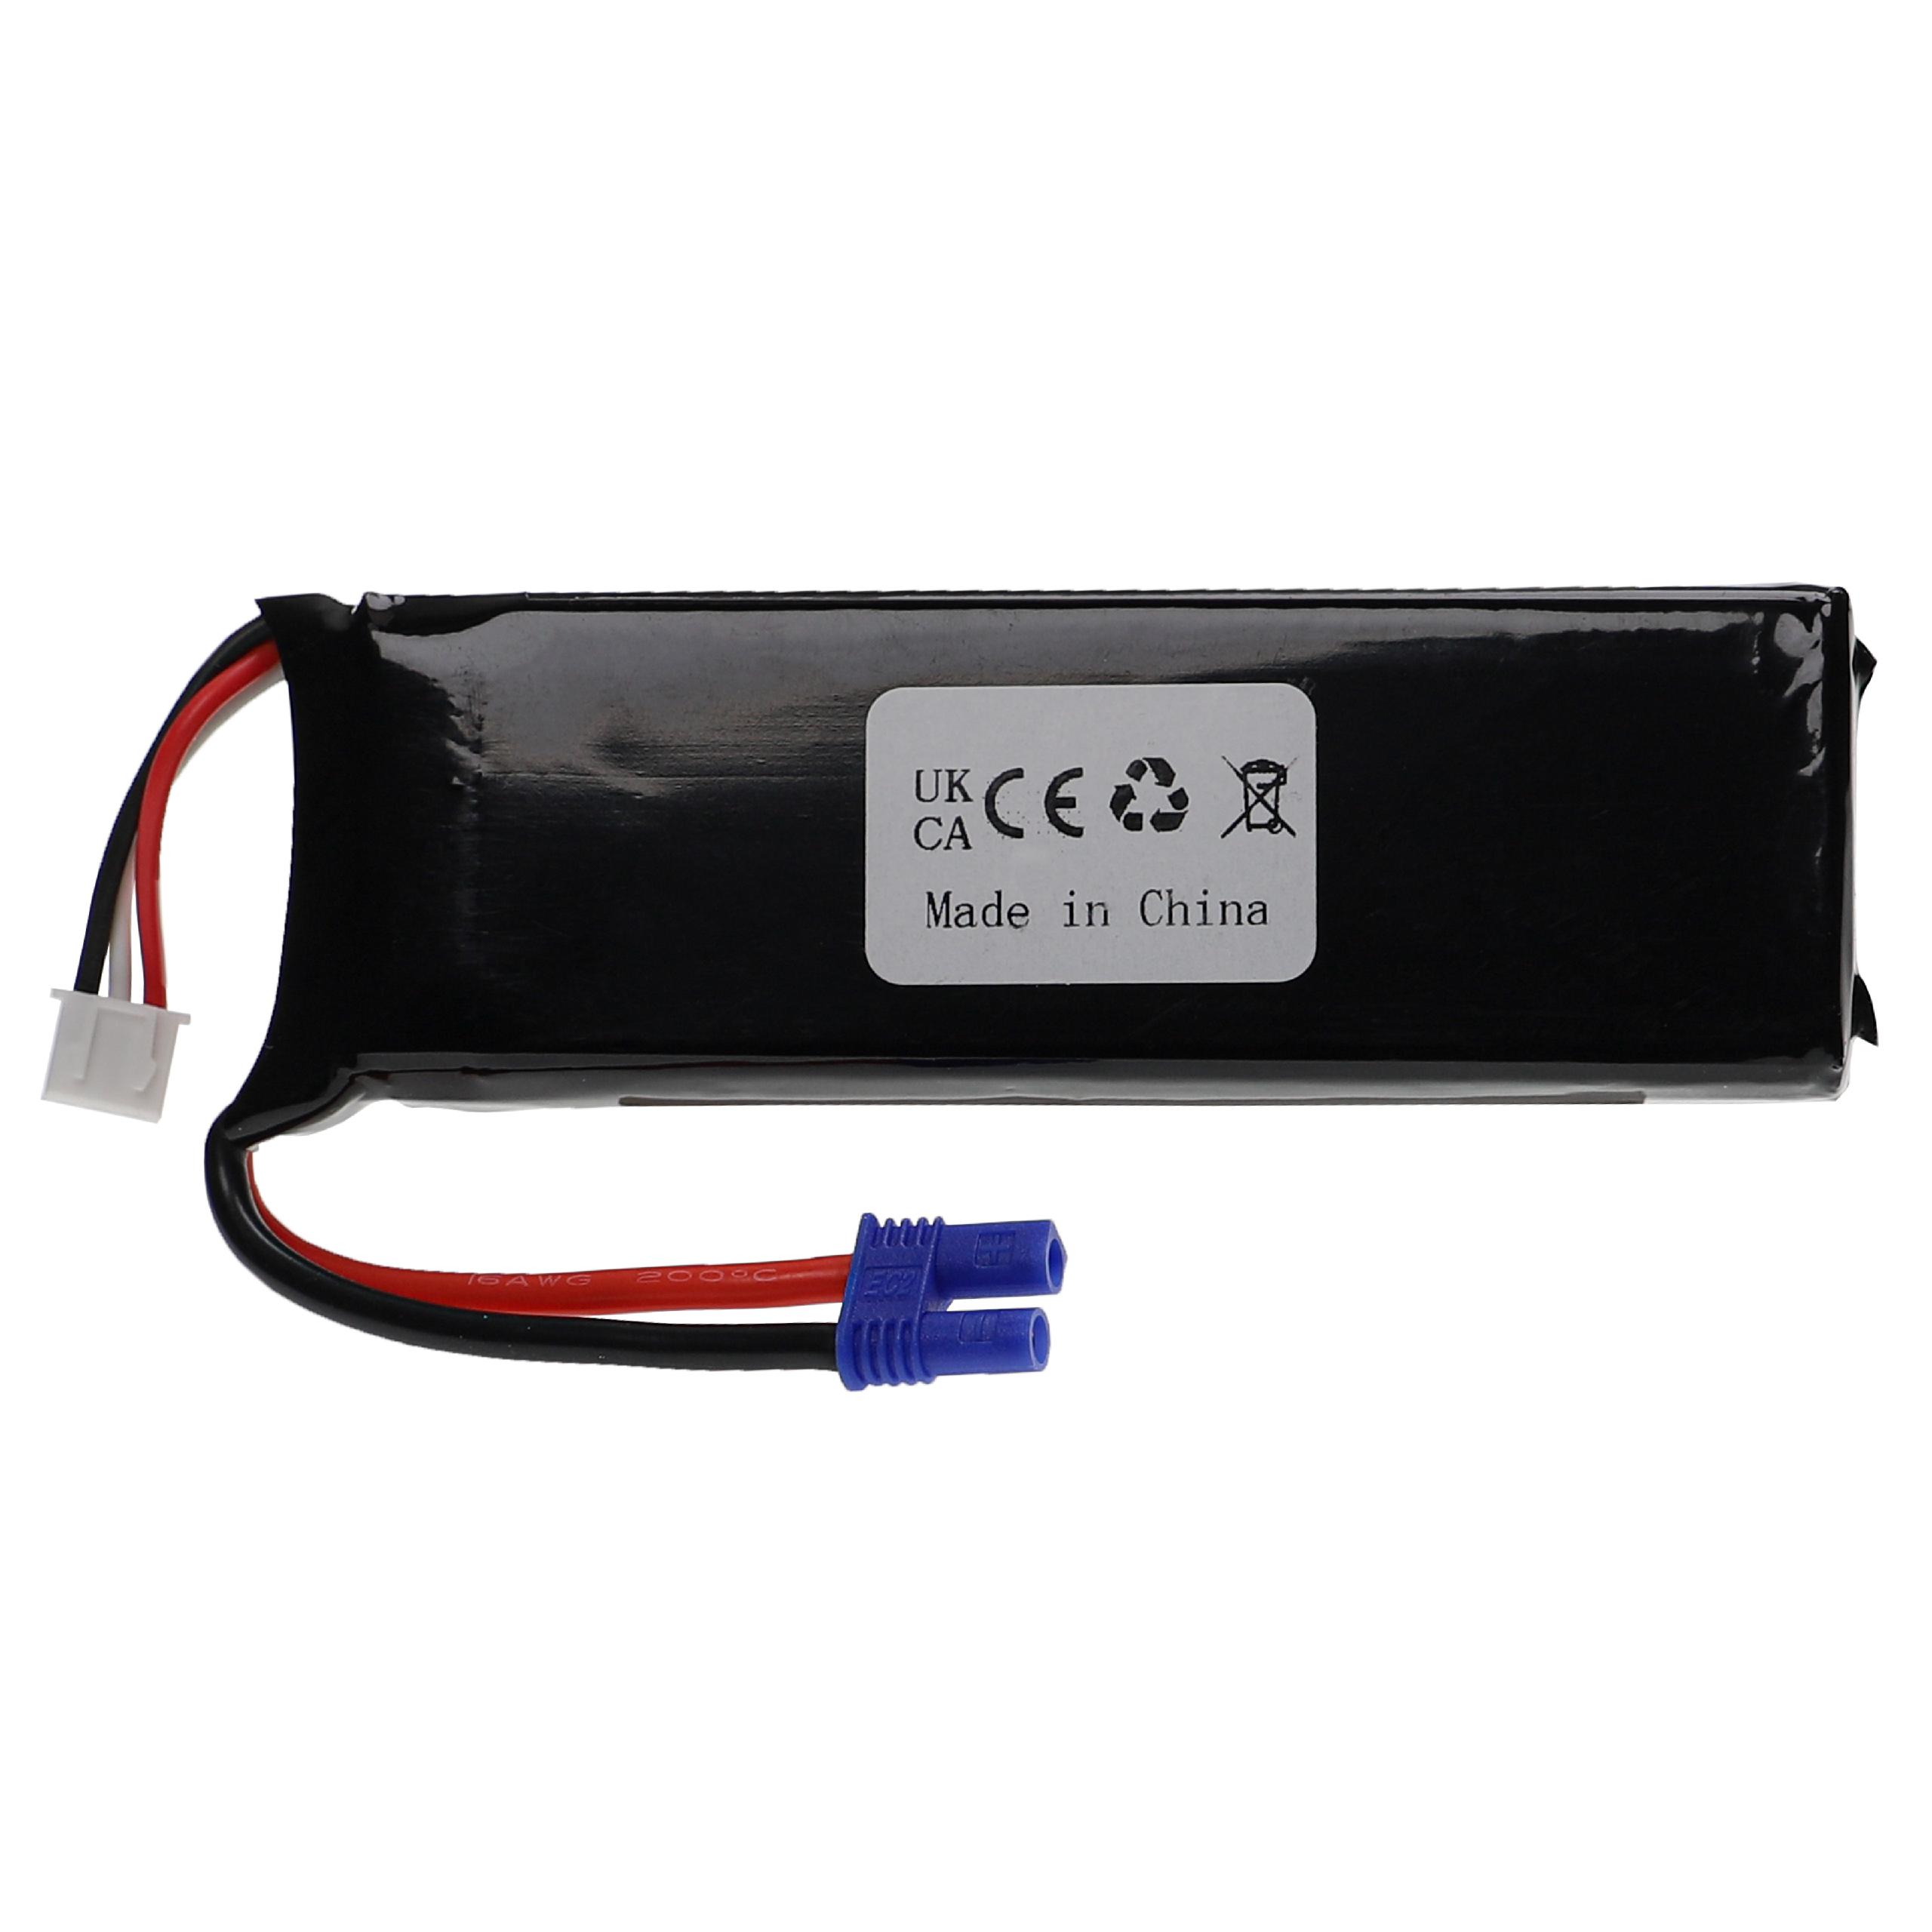 Akumulator do modeli zdalnie sterowanych RC - 2400 mAh 7,4 V LiPo, EC2